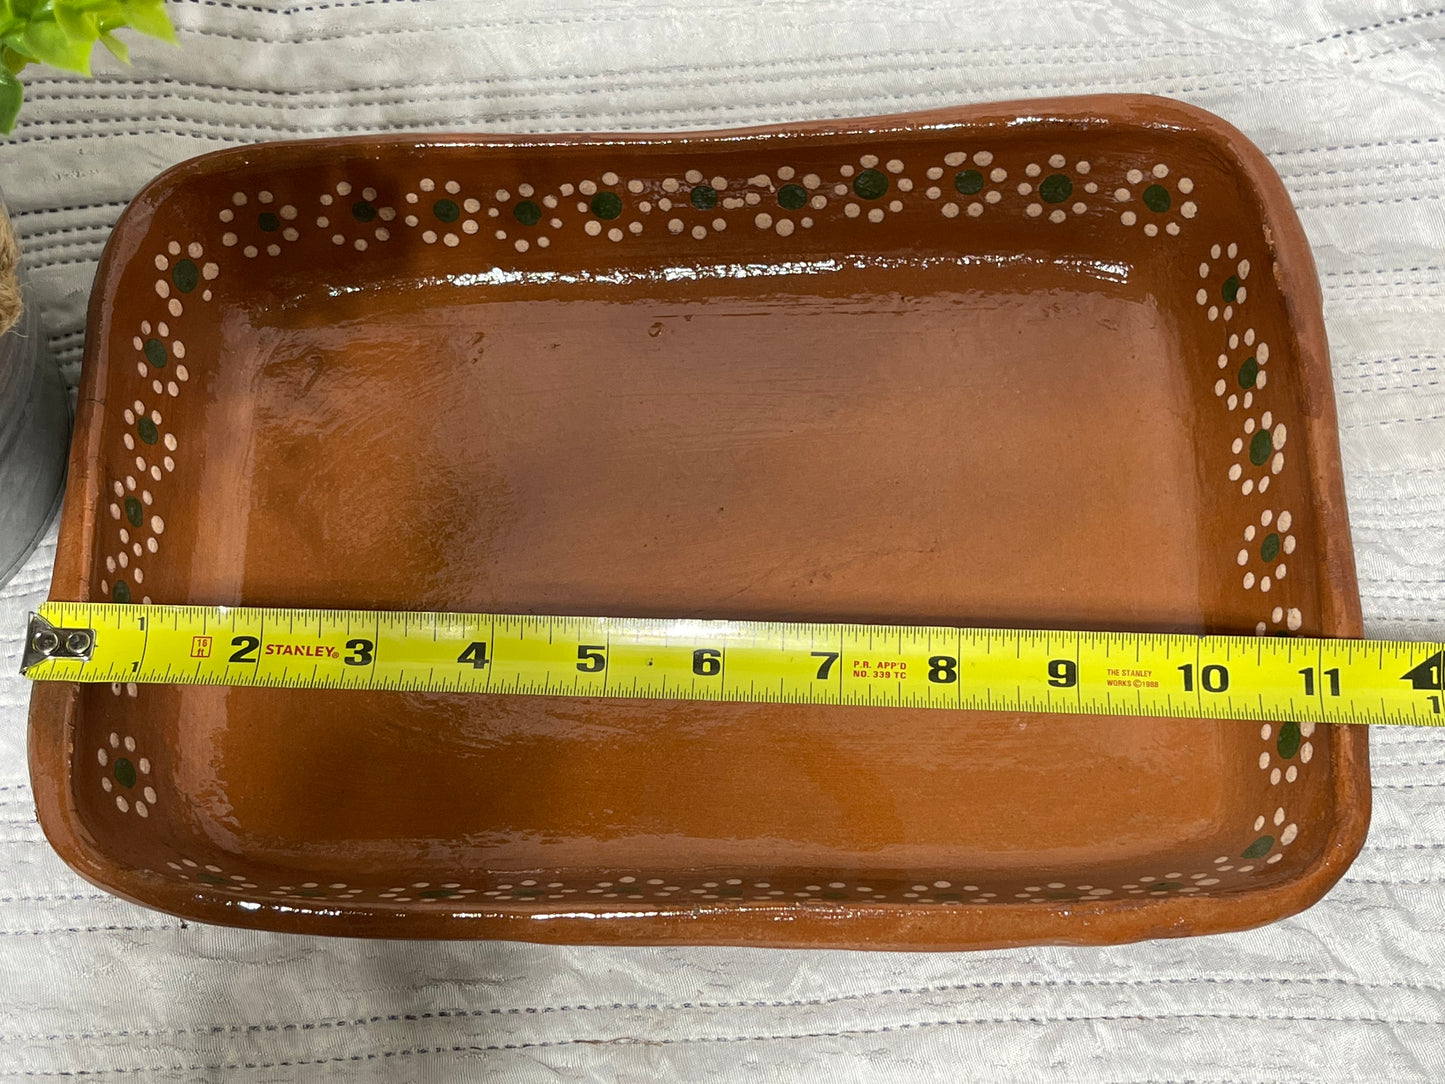 Handmade Mexican rustic clay/ceramic rectangular deep plate/ Plato de barro taquero rectangular